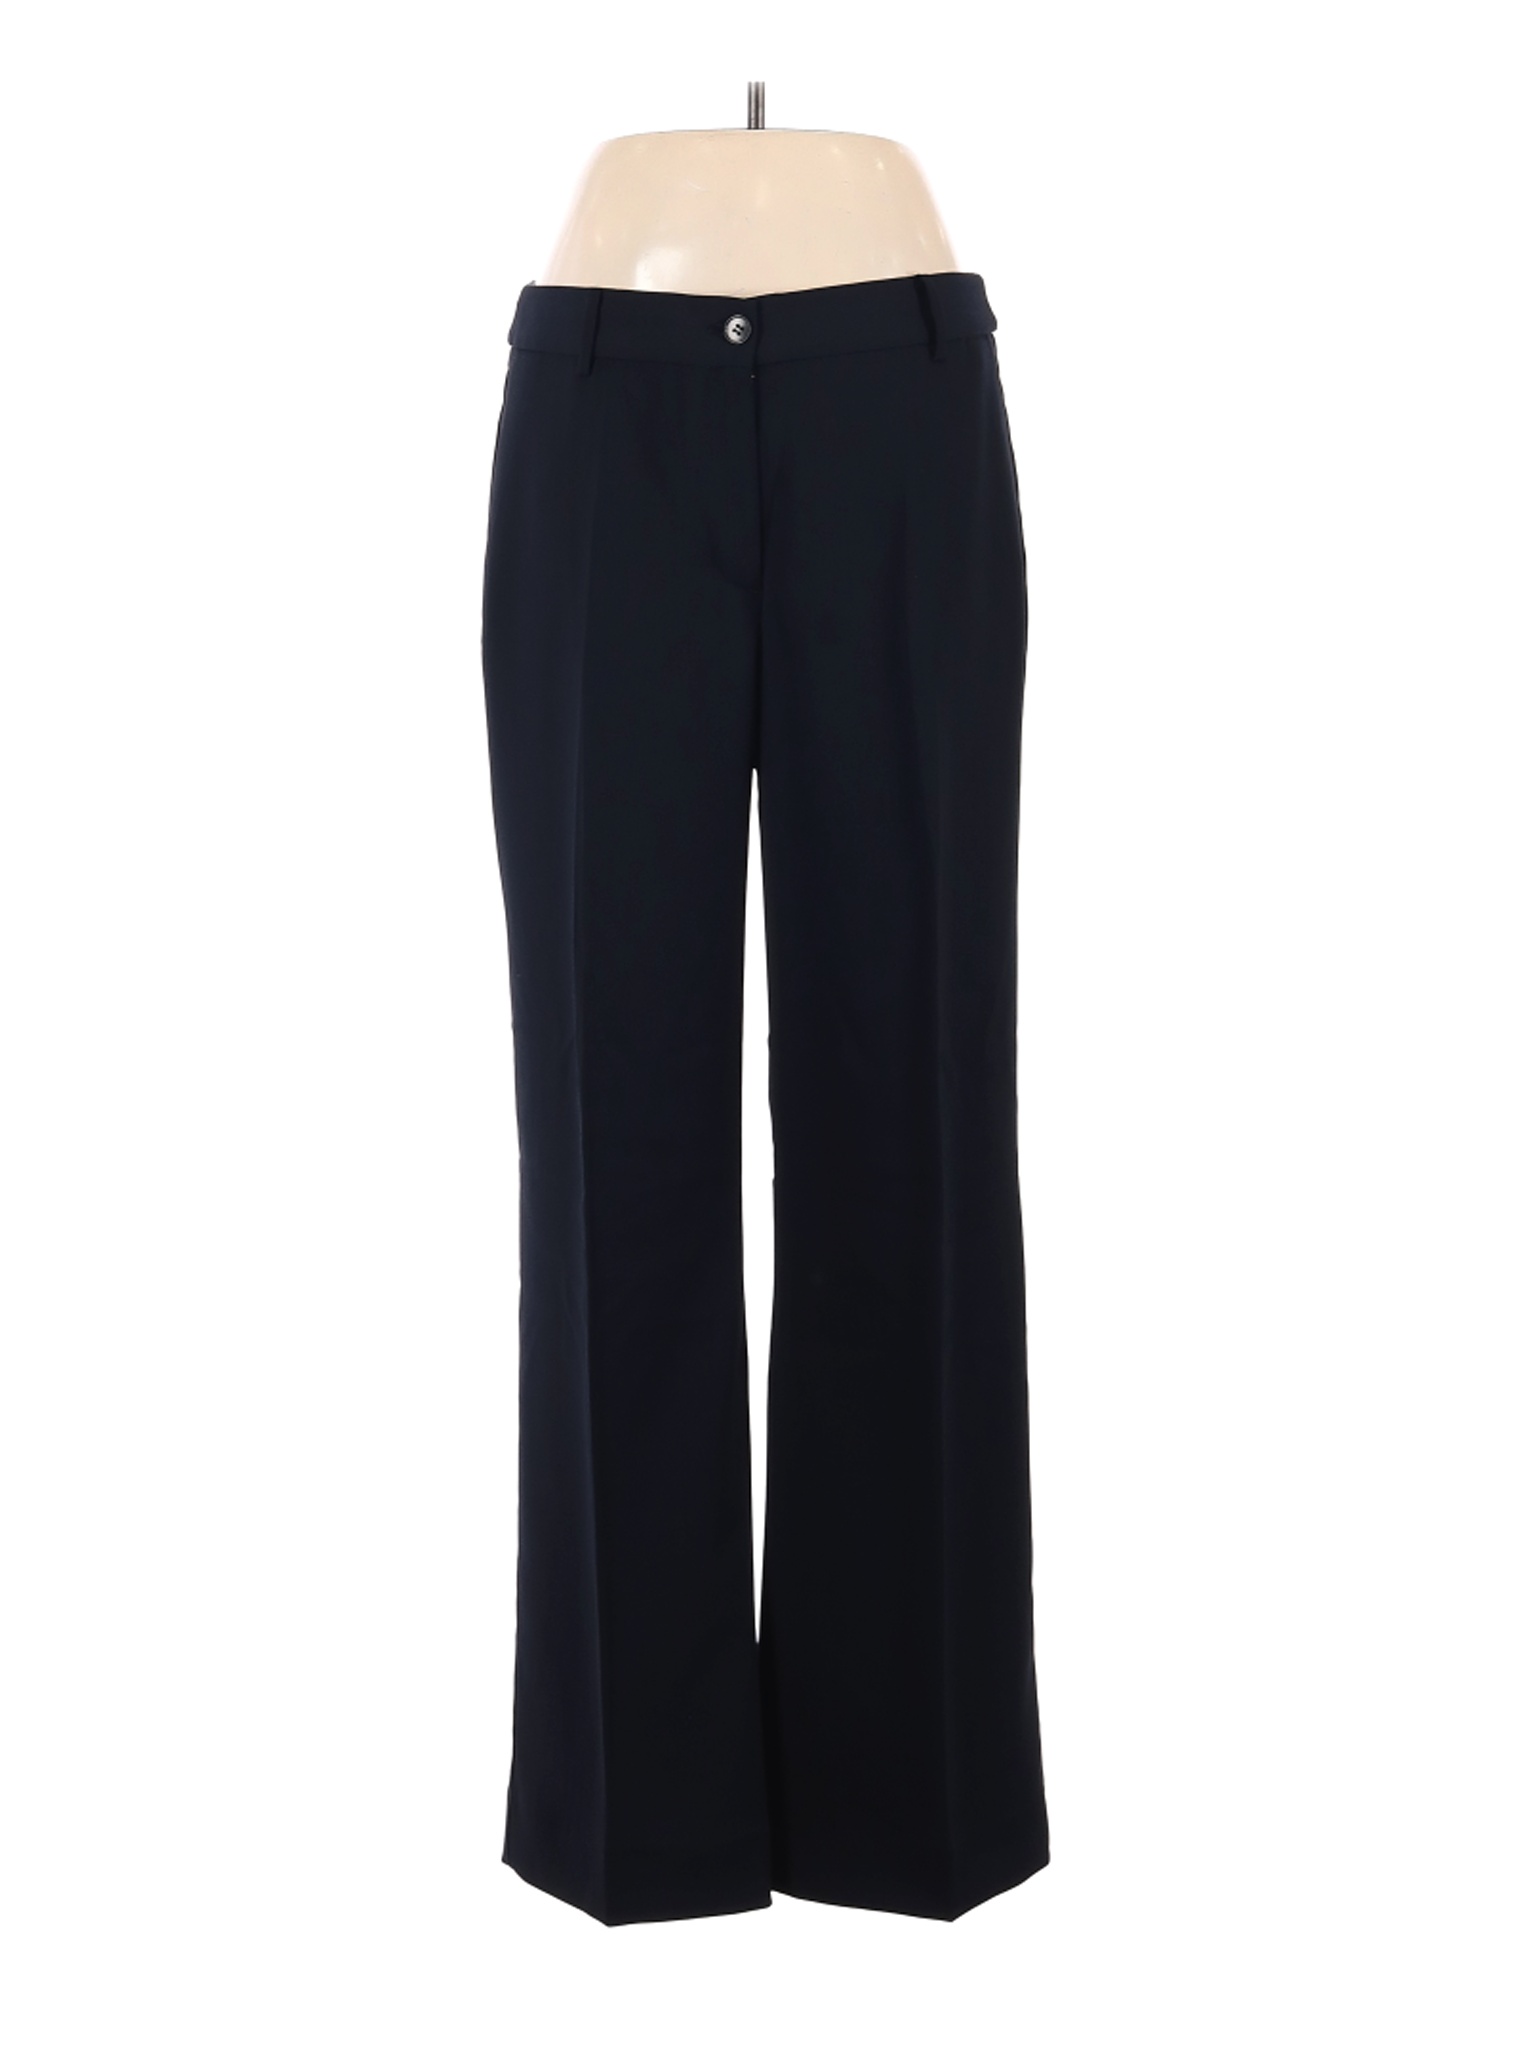 Talbots Women Black Dress Pants 12 | eBay